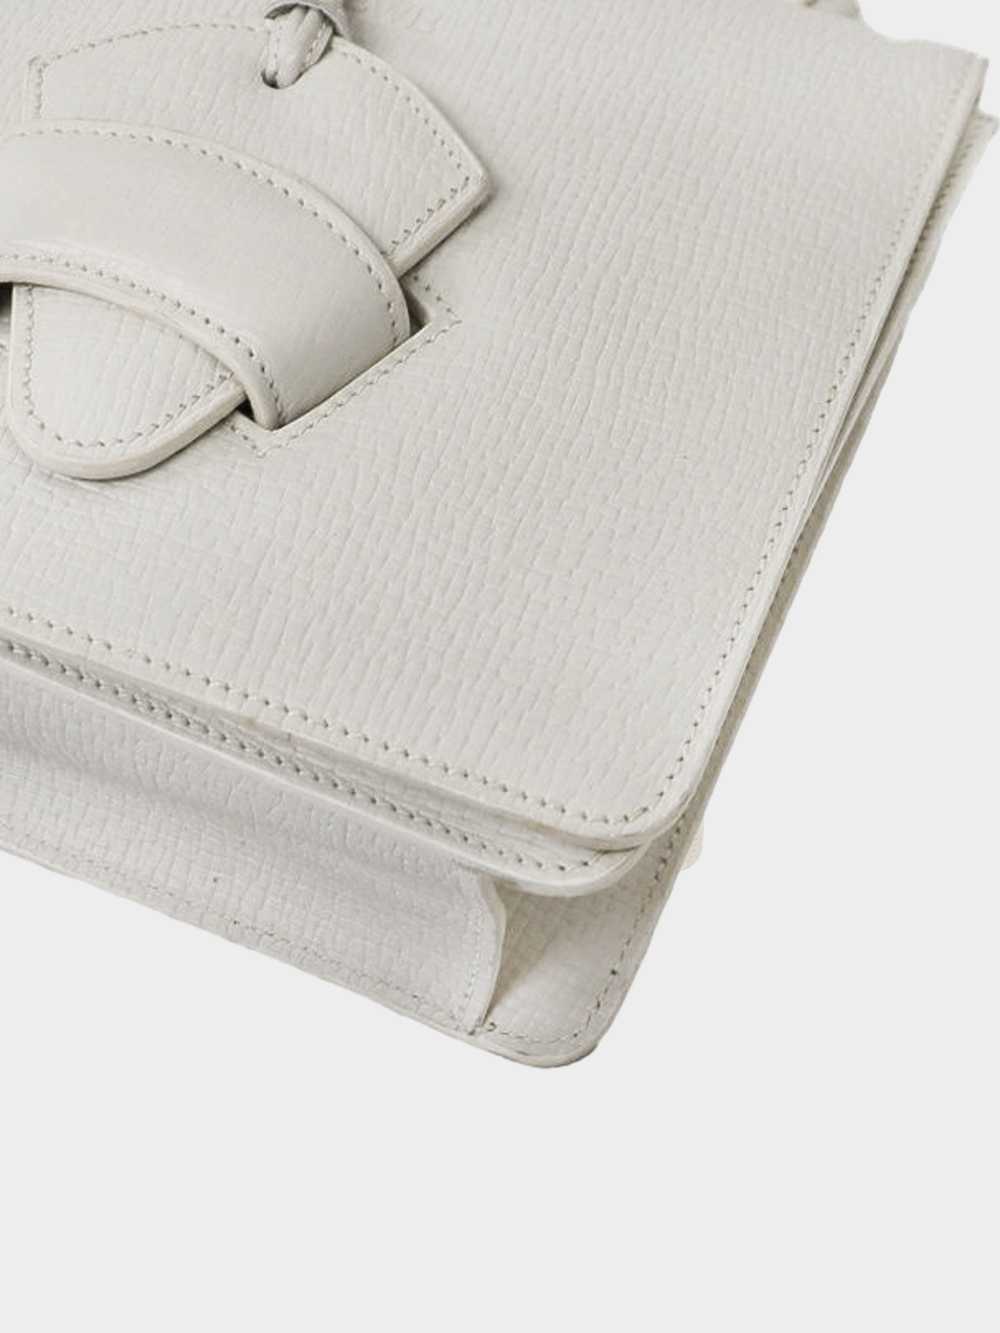 Loewe 2010s White Barcelona Handbag - image 4